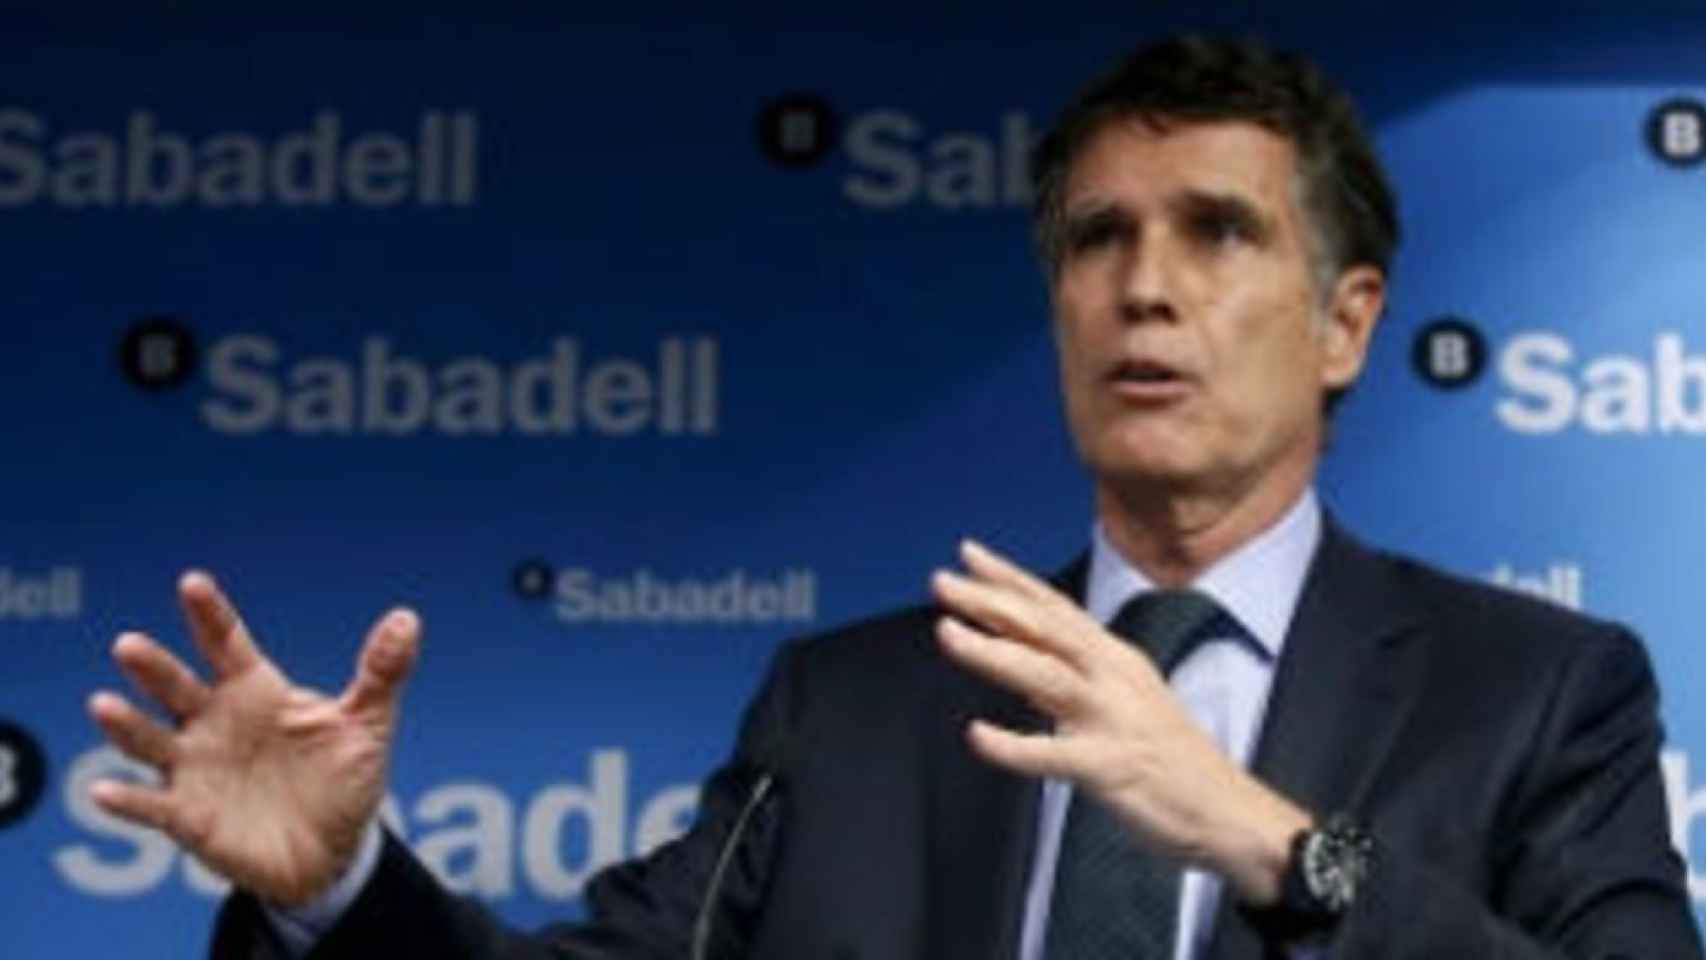 Guardiola (Sabadell) ve posible que empresas preparen plan de contingencia por independentismo en Cataluña